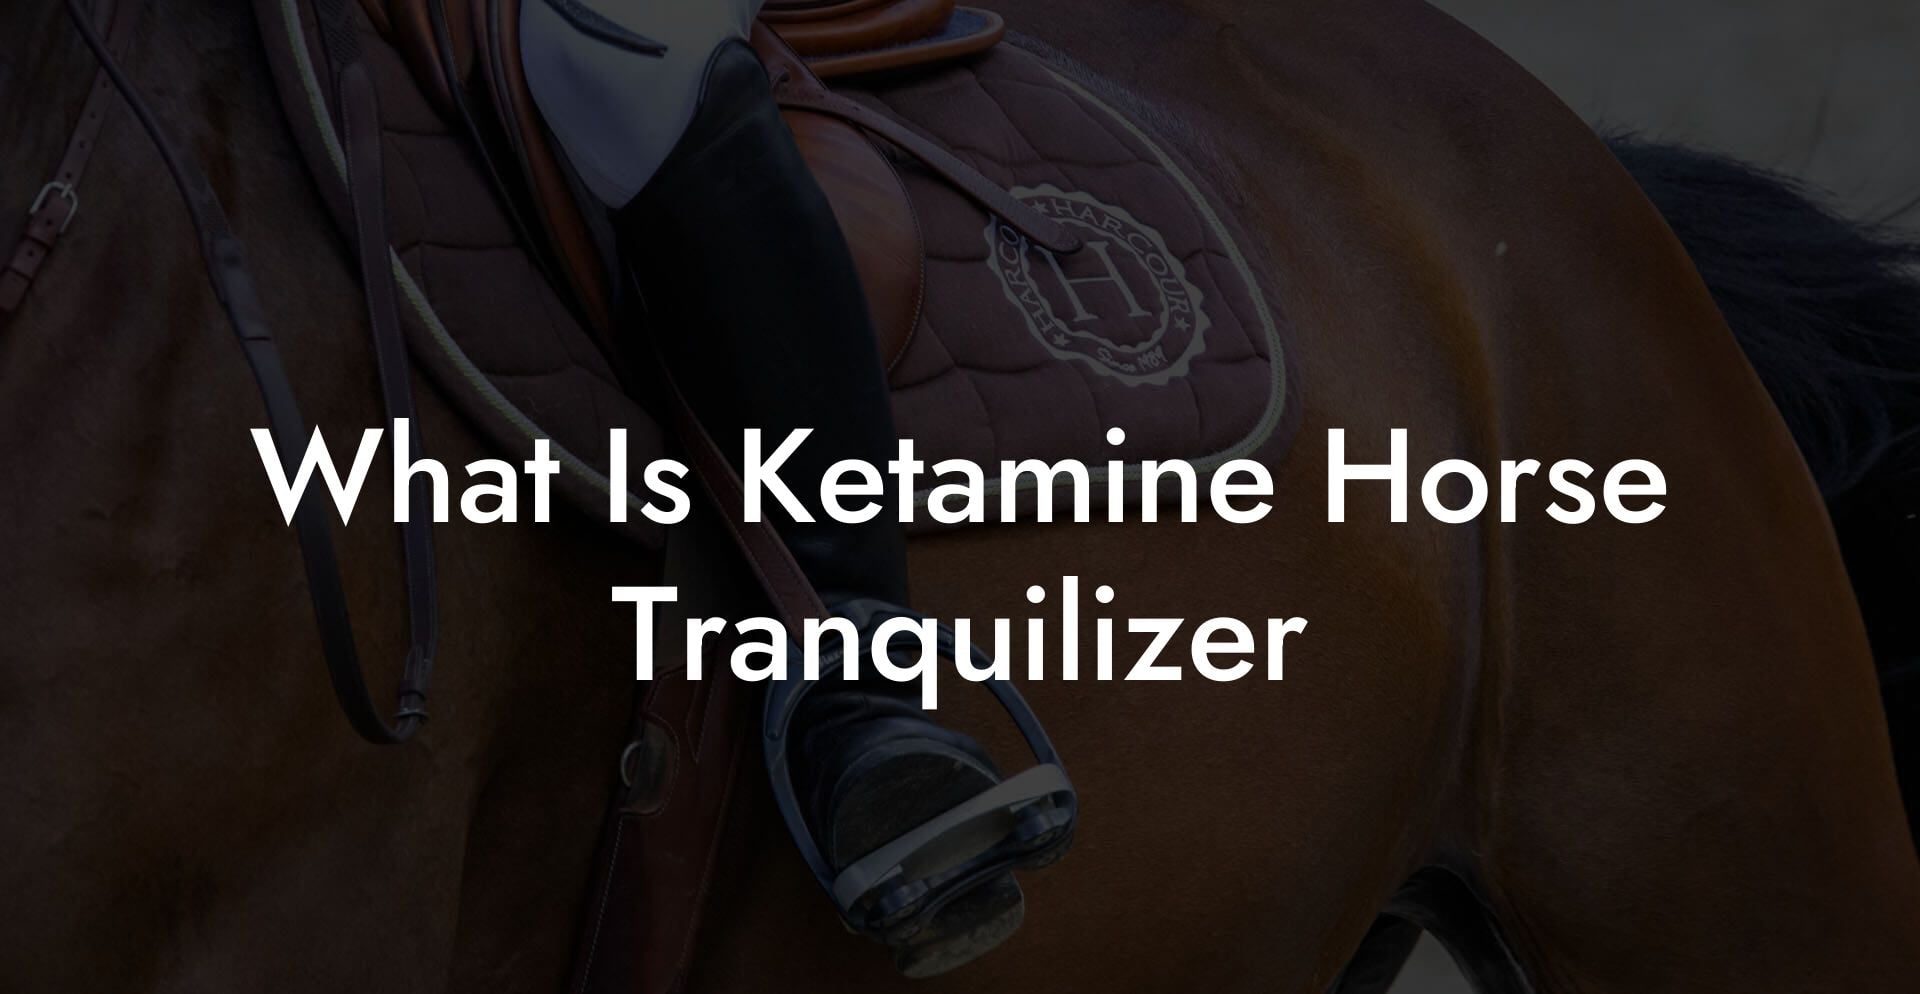 What Is Ketamine Horse Tranquilizer